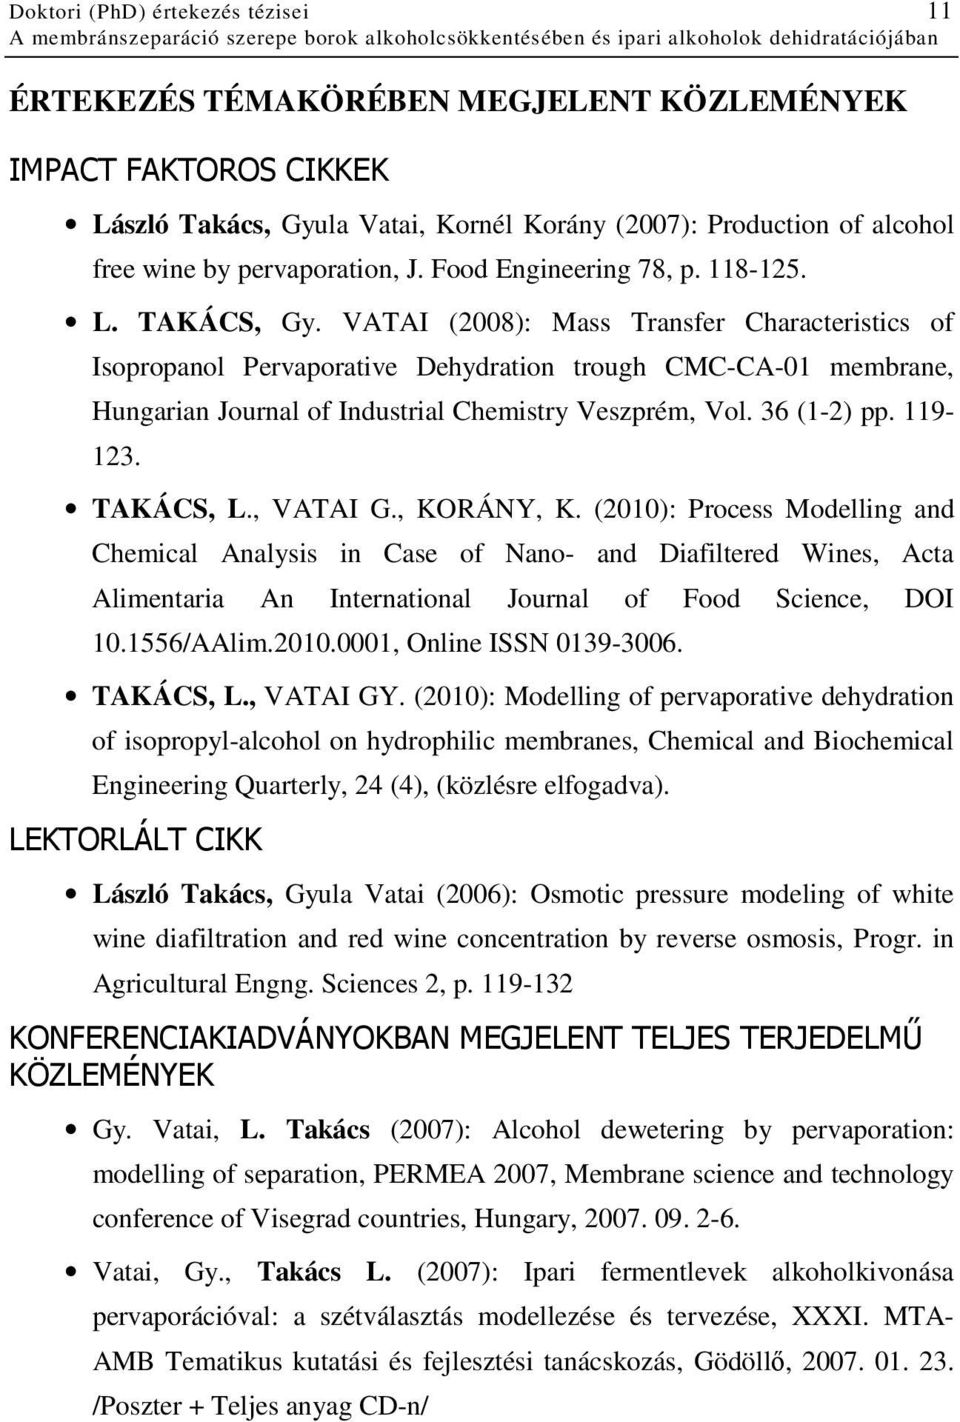 VATAI (2008): Mass Transfer Characteristics of Isopropanol Pervaporative Dehydration trough CMC-CA-01 membrane, Hungarian Journal of Industrial Chemistry Veszprém, Vol. 36 (1-2) pp. 119-123.